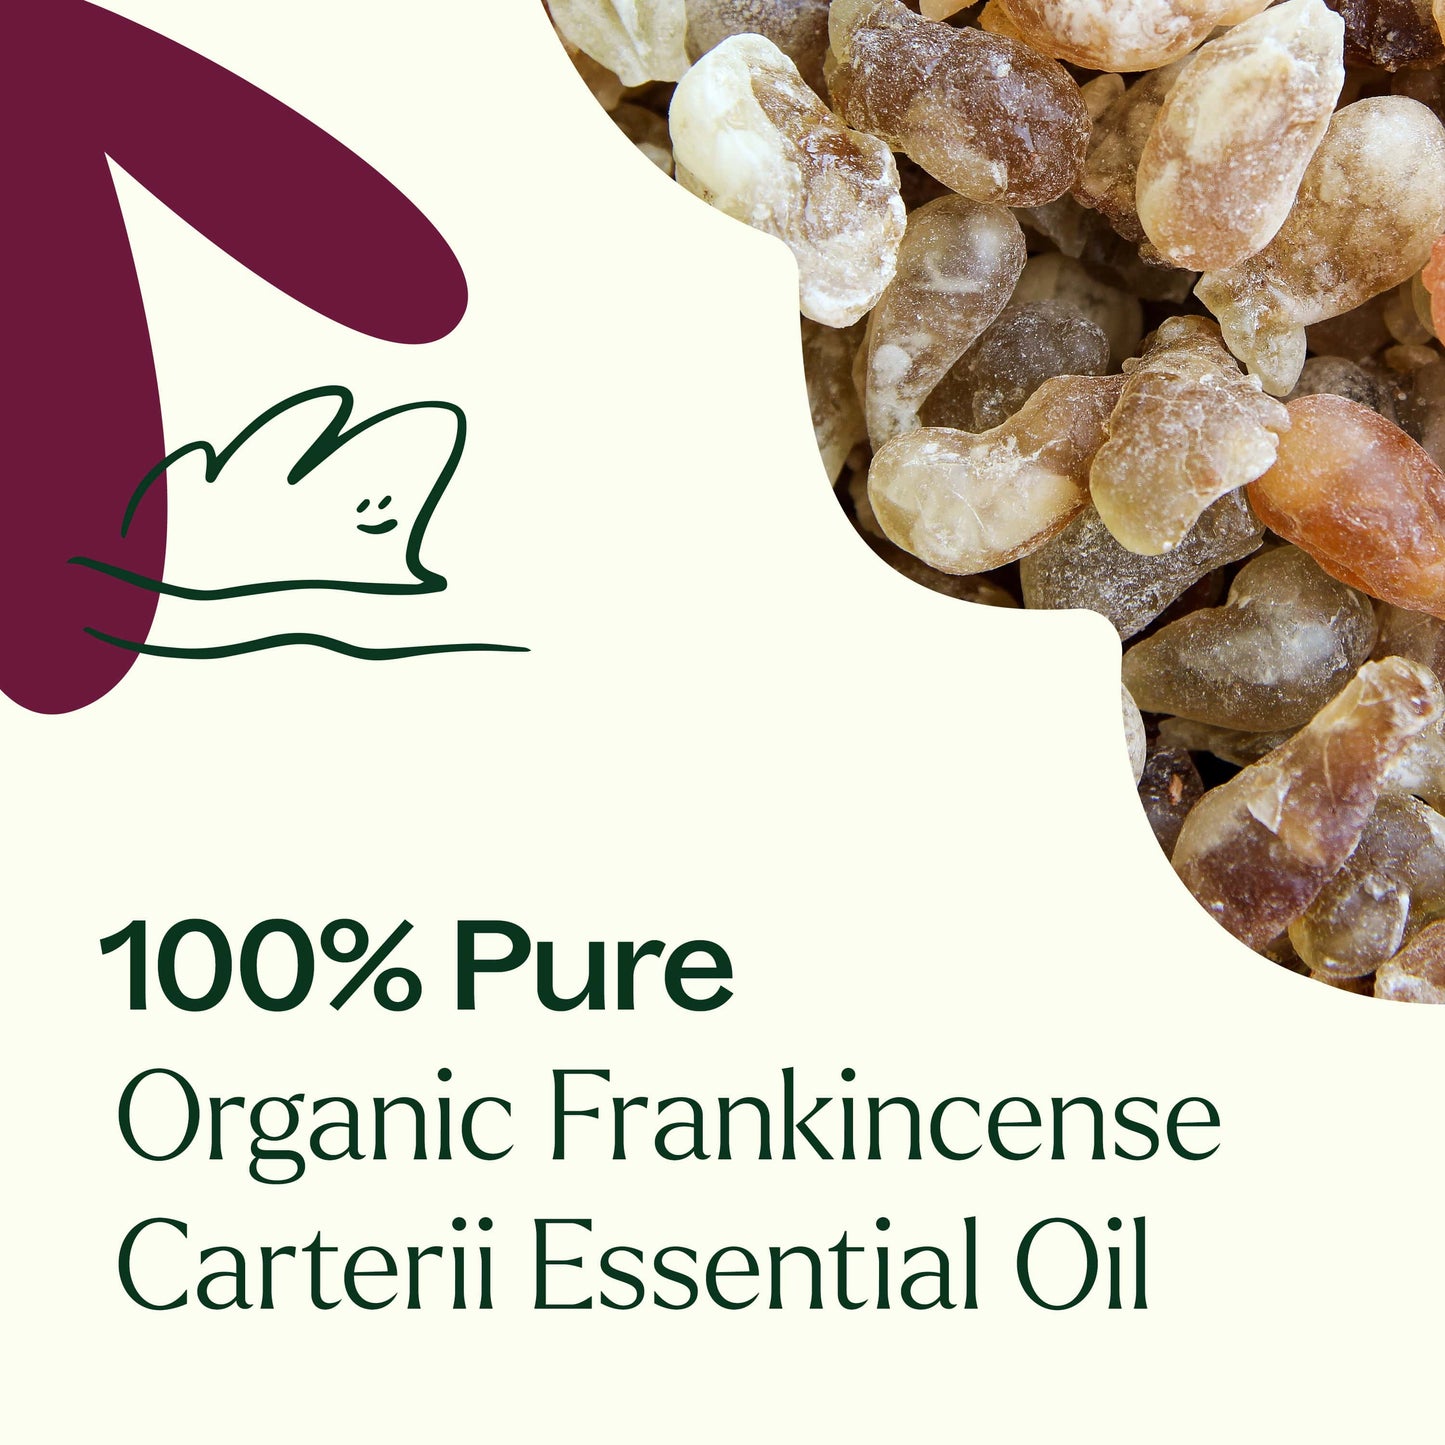 Organic Frankincense Carterii Essential Oil is 100% pure